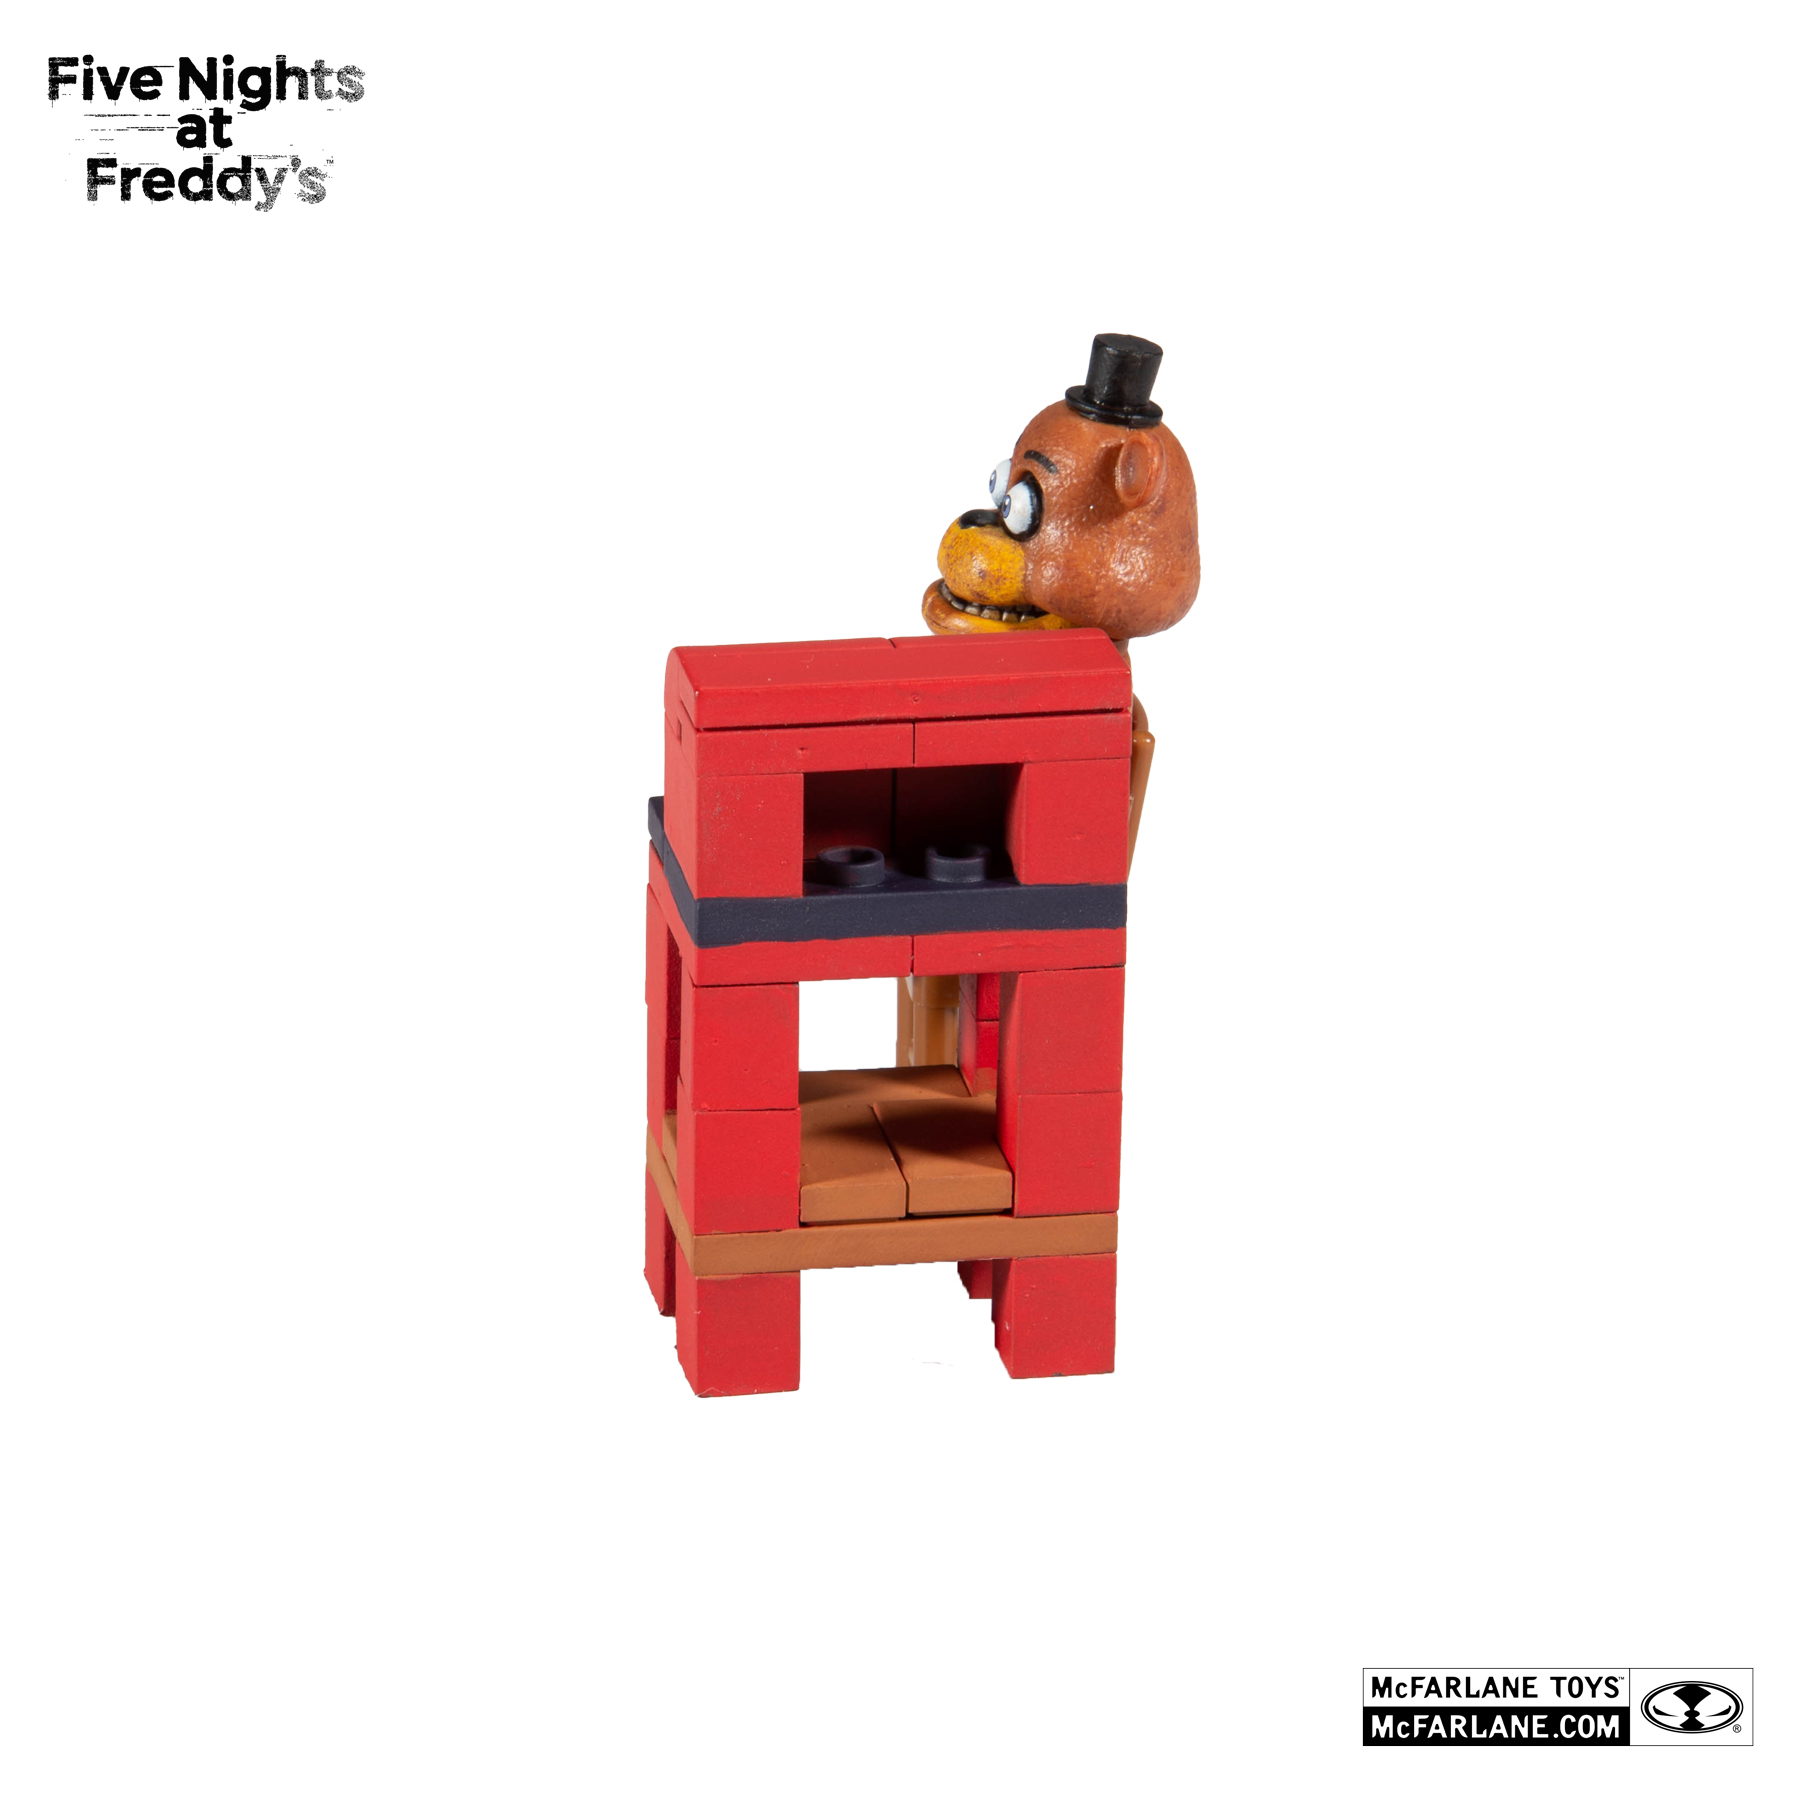 FNAF McFarlane” Freddy Fazbear Parts & Service Mini Construction Set 39  Pieces